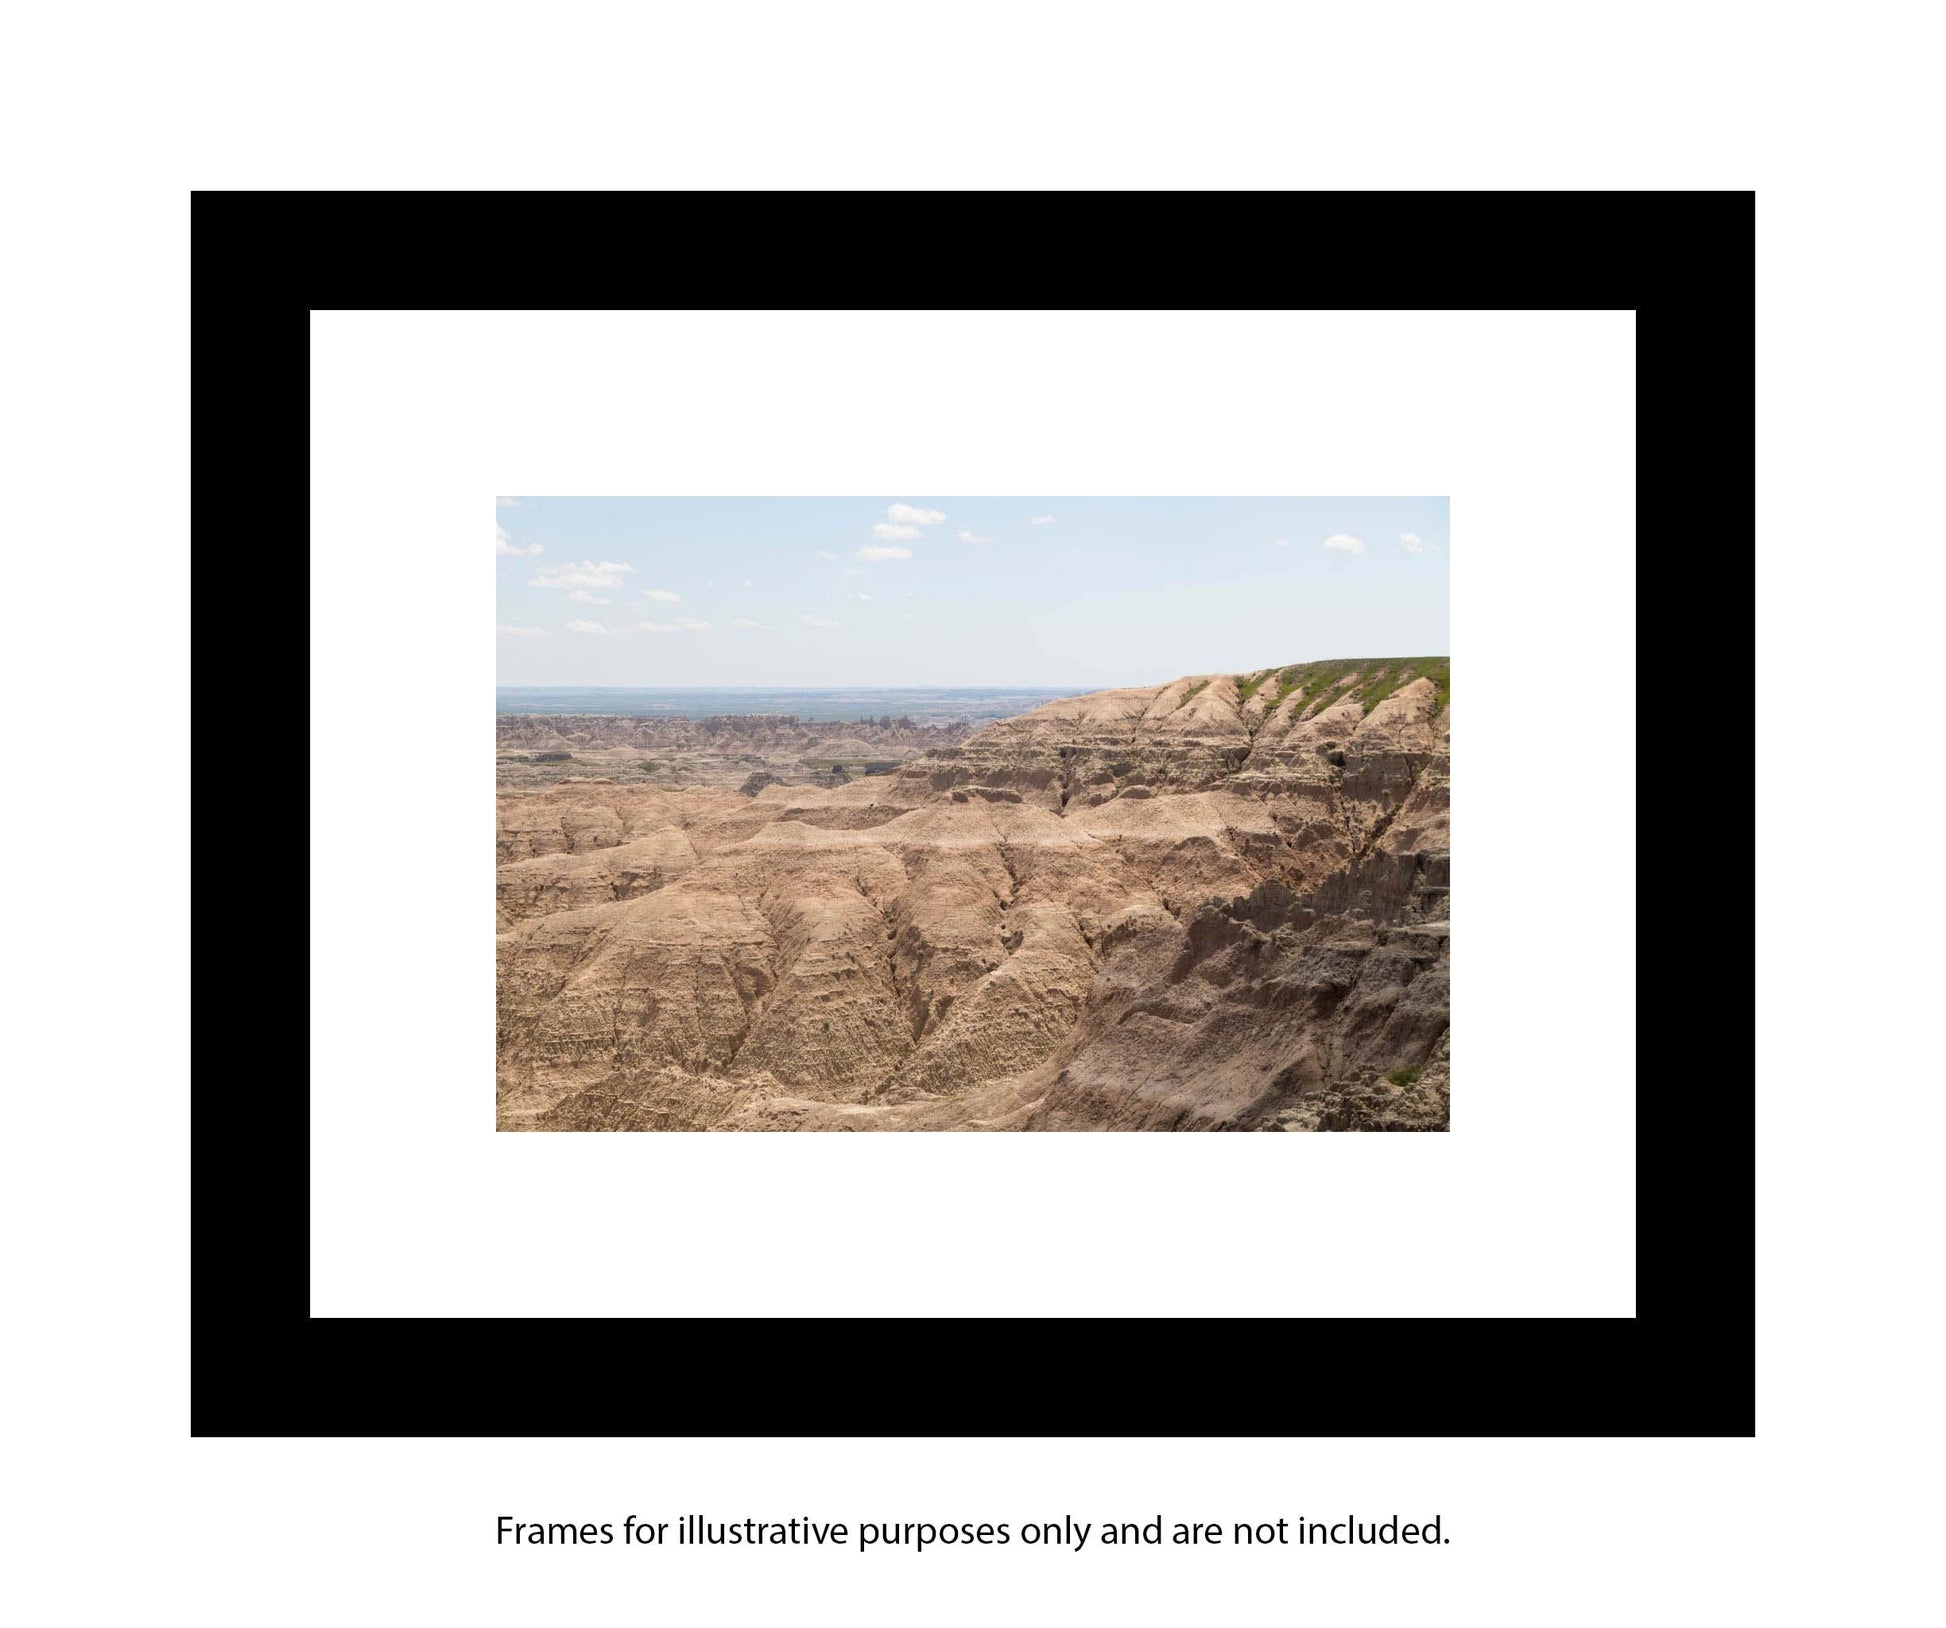 Badlands National Park Scenic Canyon Overlook, South Dakota Landscape Photography Print, Midwest Travel Photo Art, Unframed Print or Canvas - eireanneilis